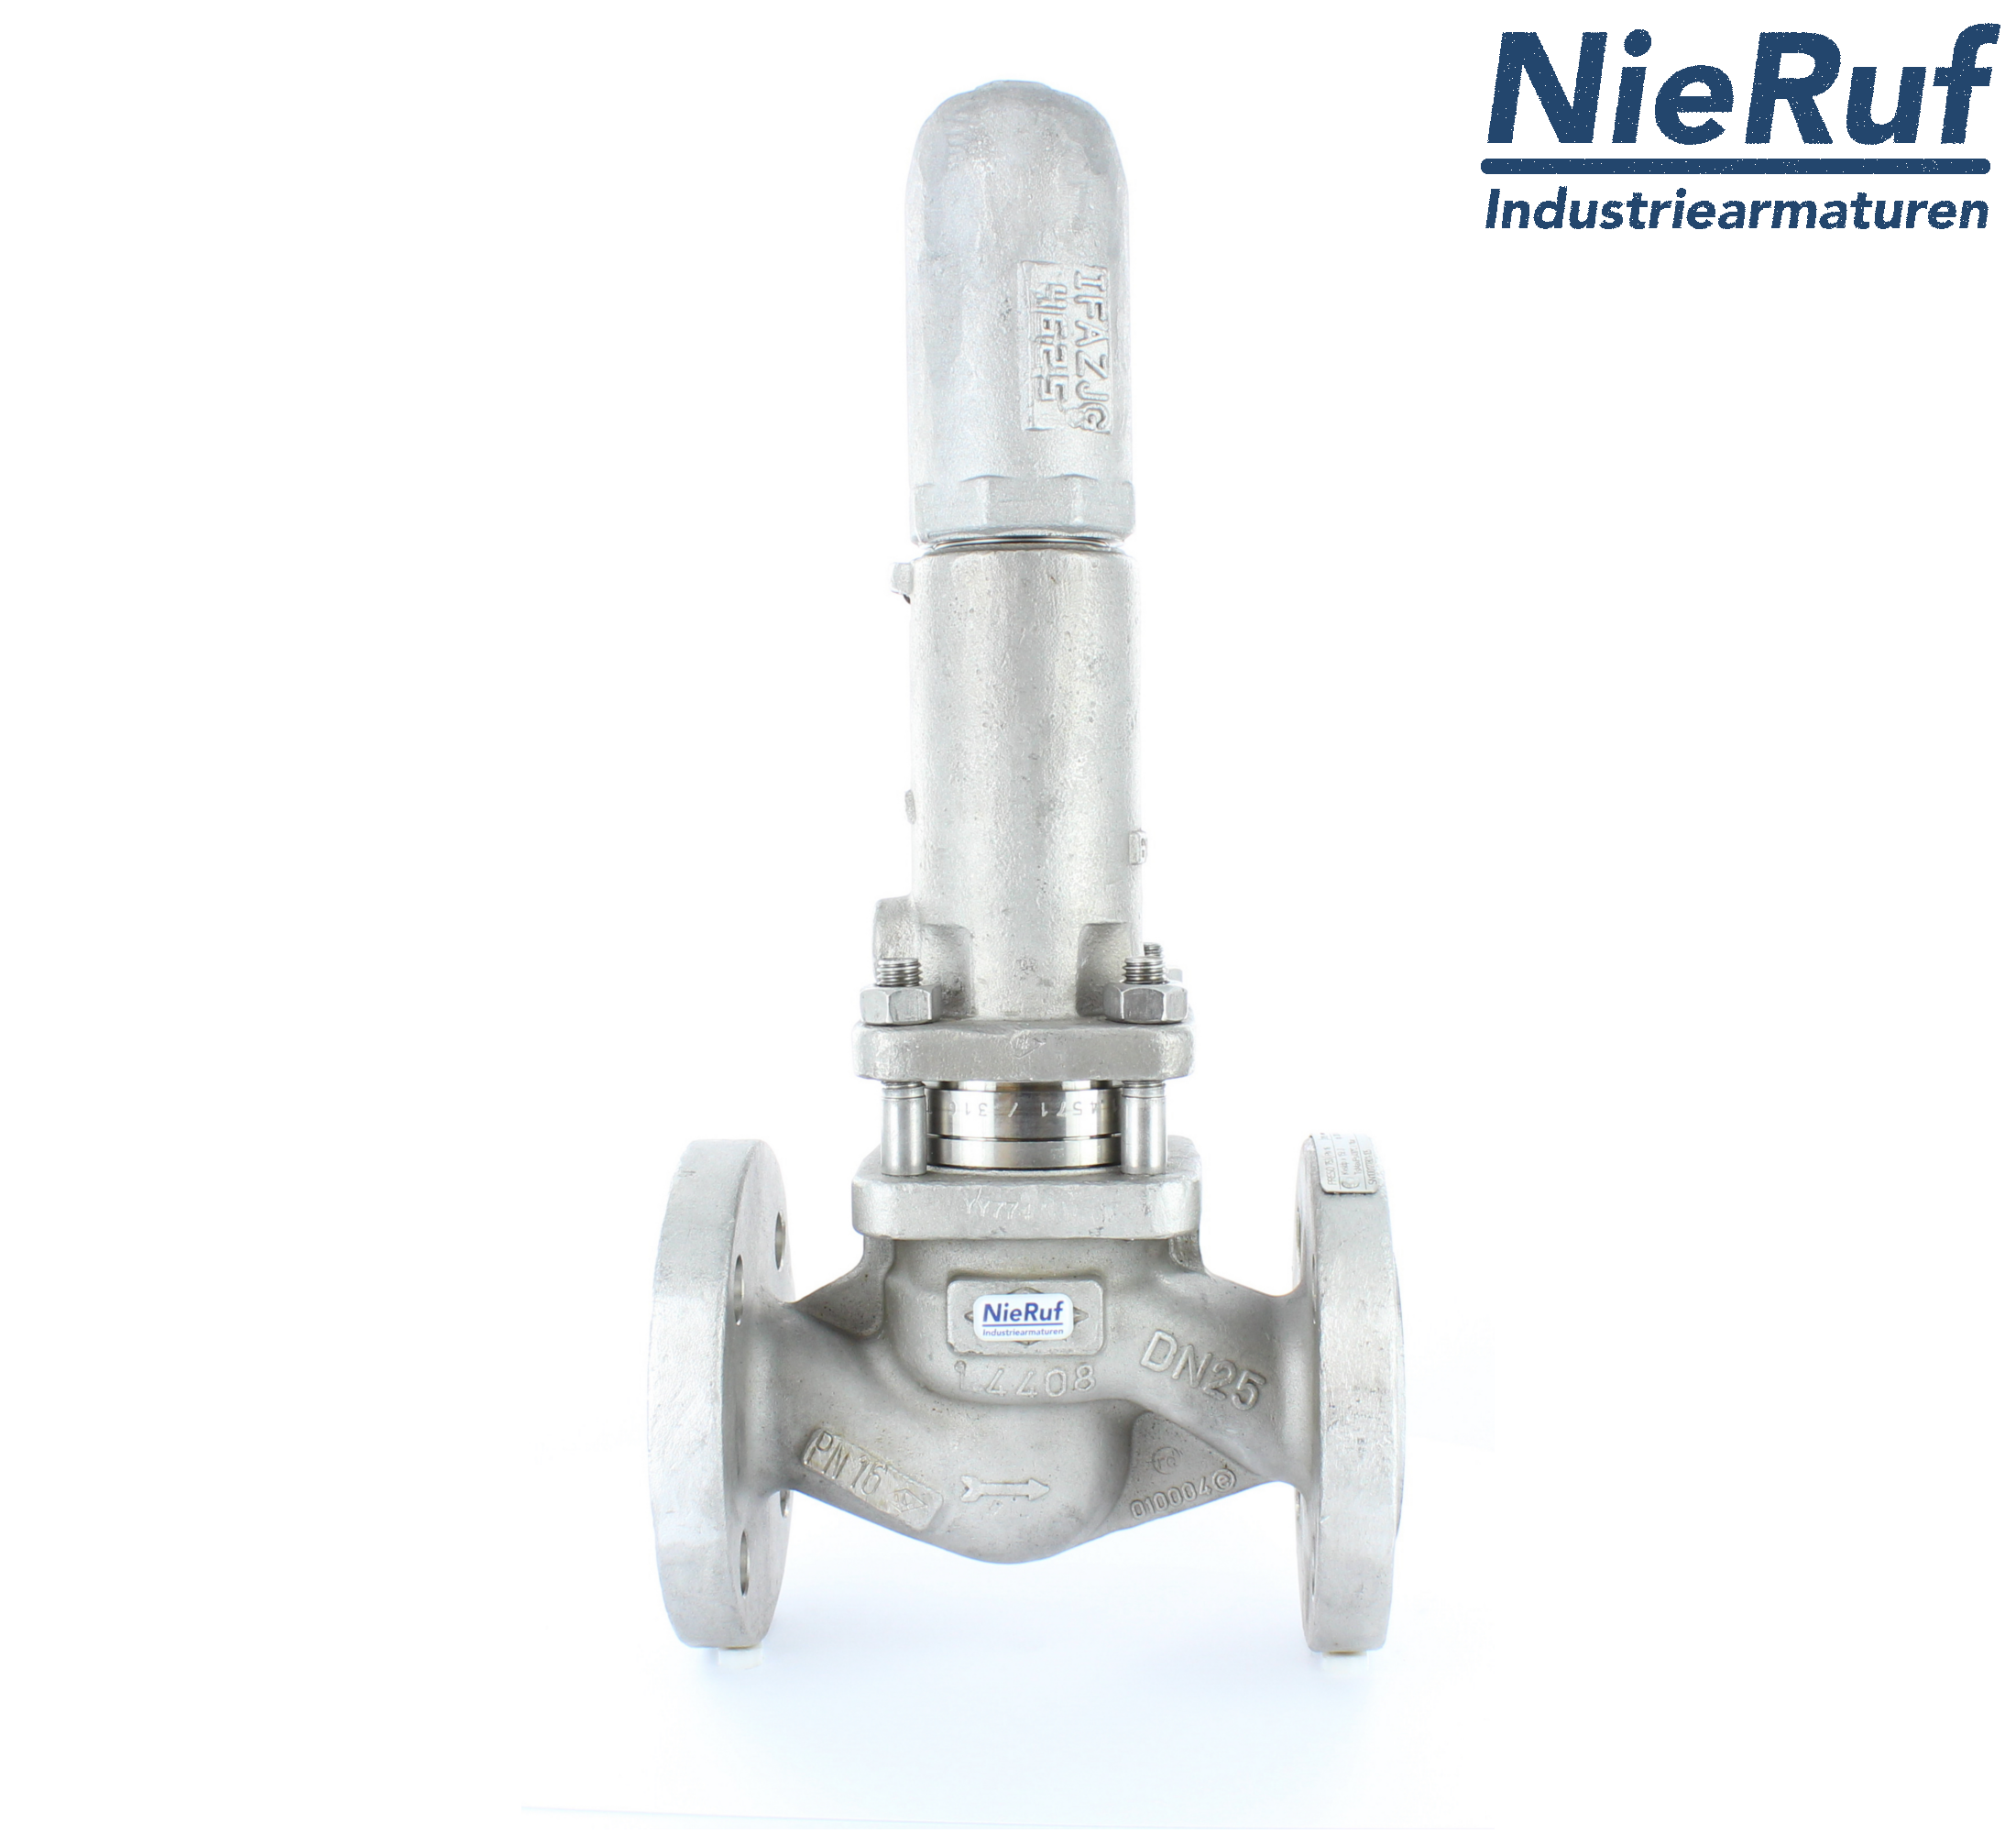 piston overflow valve DN 25 UV13 stainless steel AISI 316L 1,0 - 3,0 bar